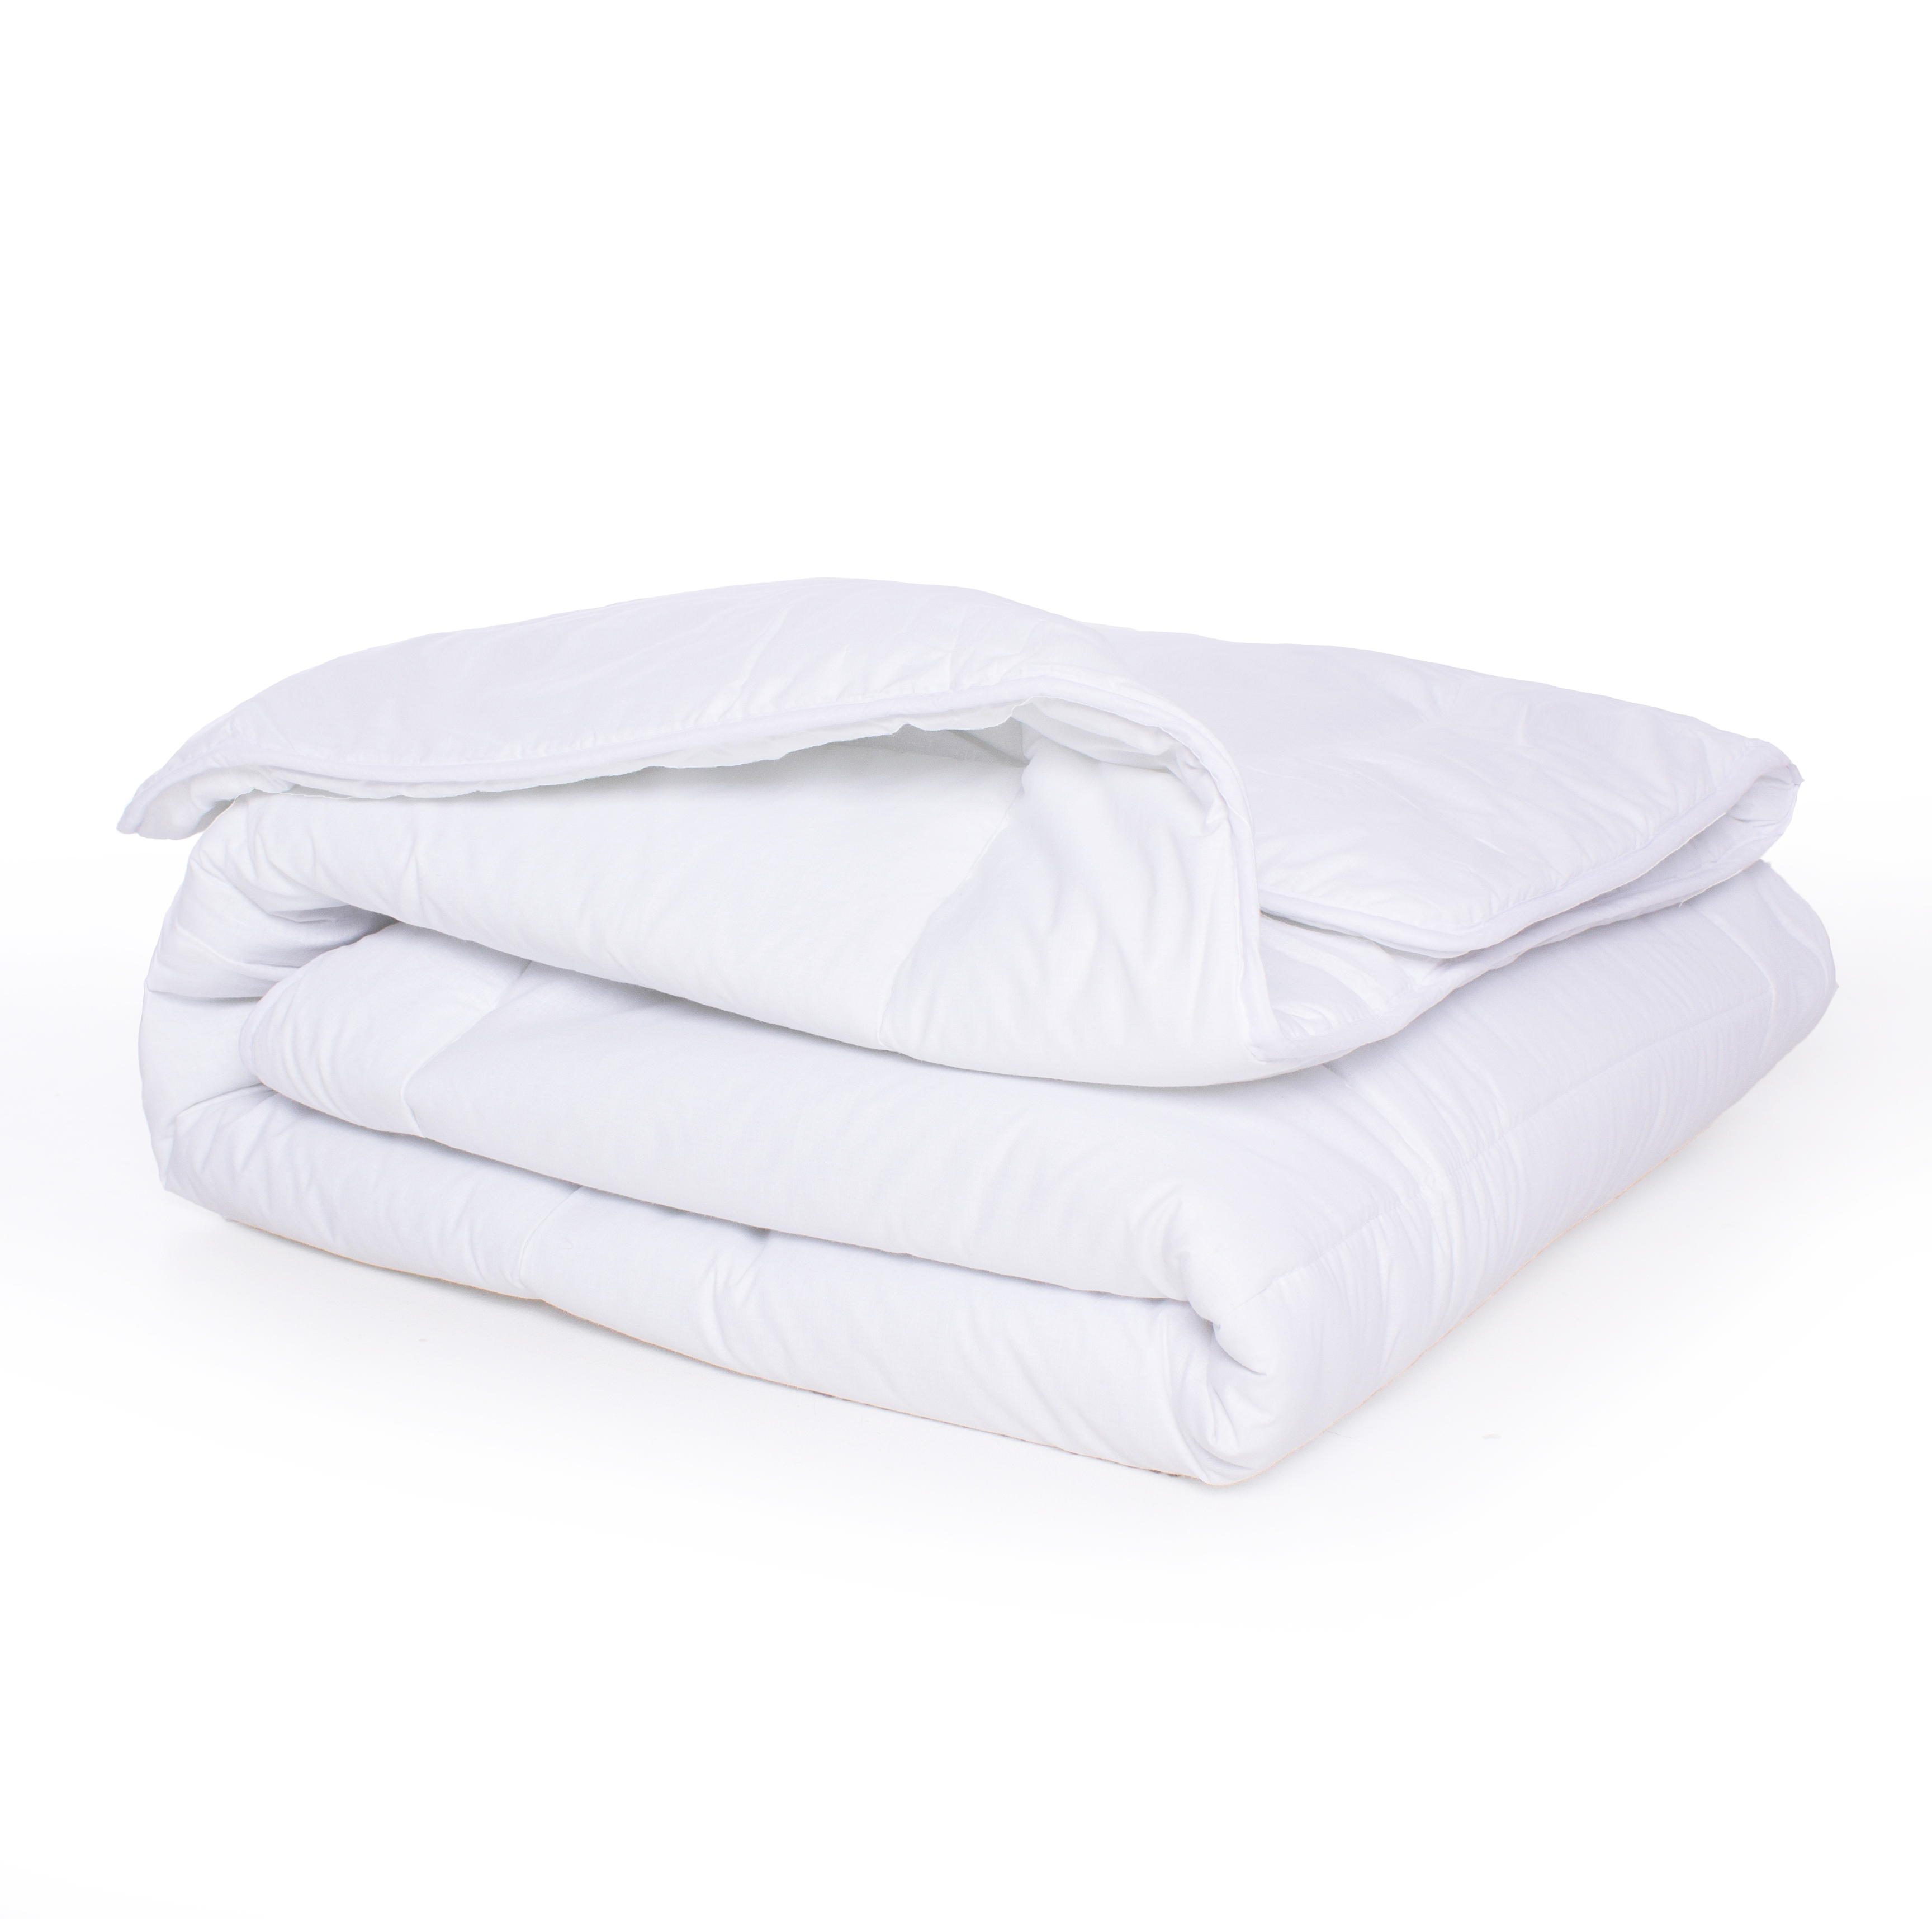 Одеяло шерстяное MirSon Bianco Экстра Премиум №0787, зимнее, 140x205 см, белое - фото 3